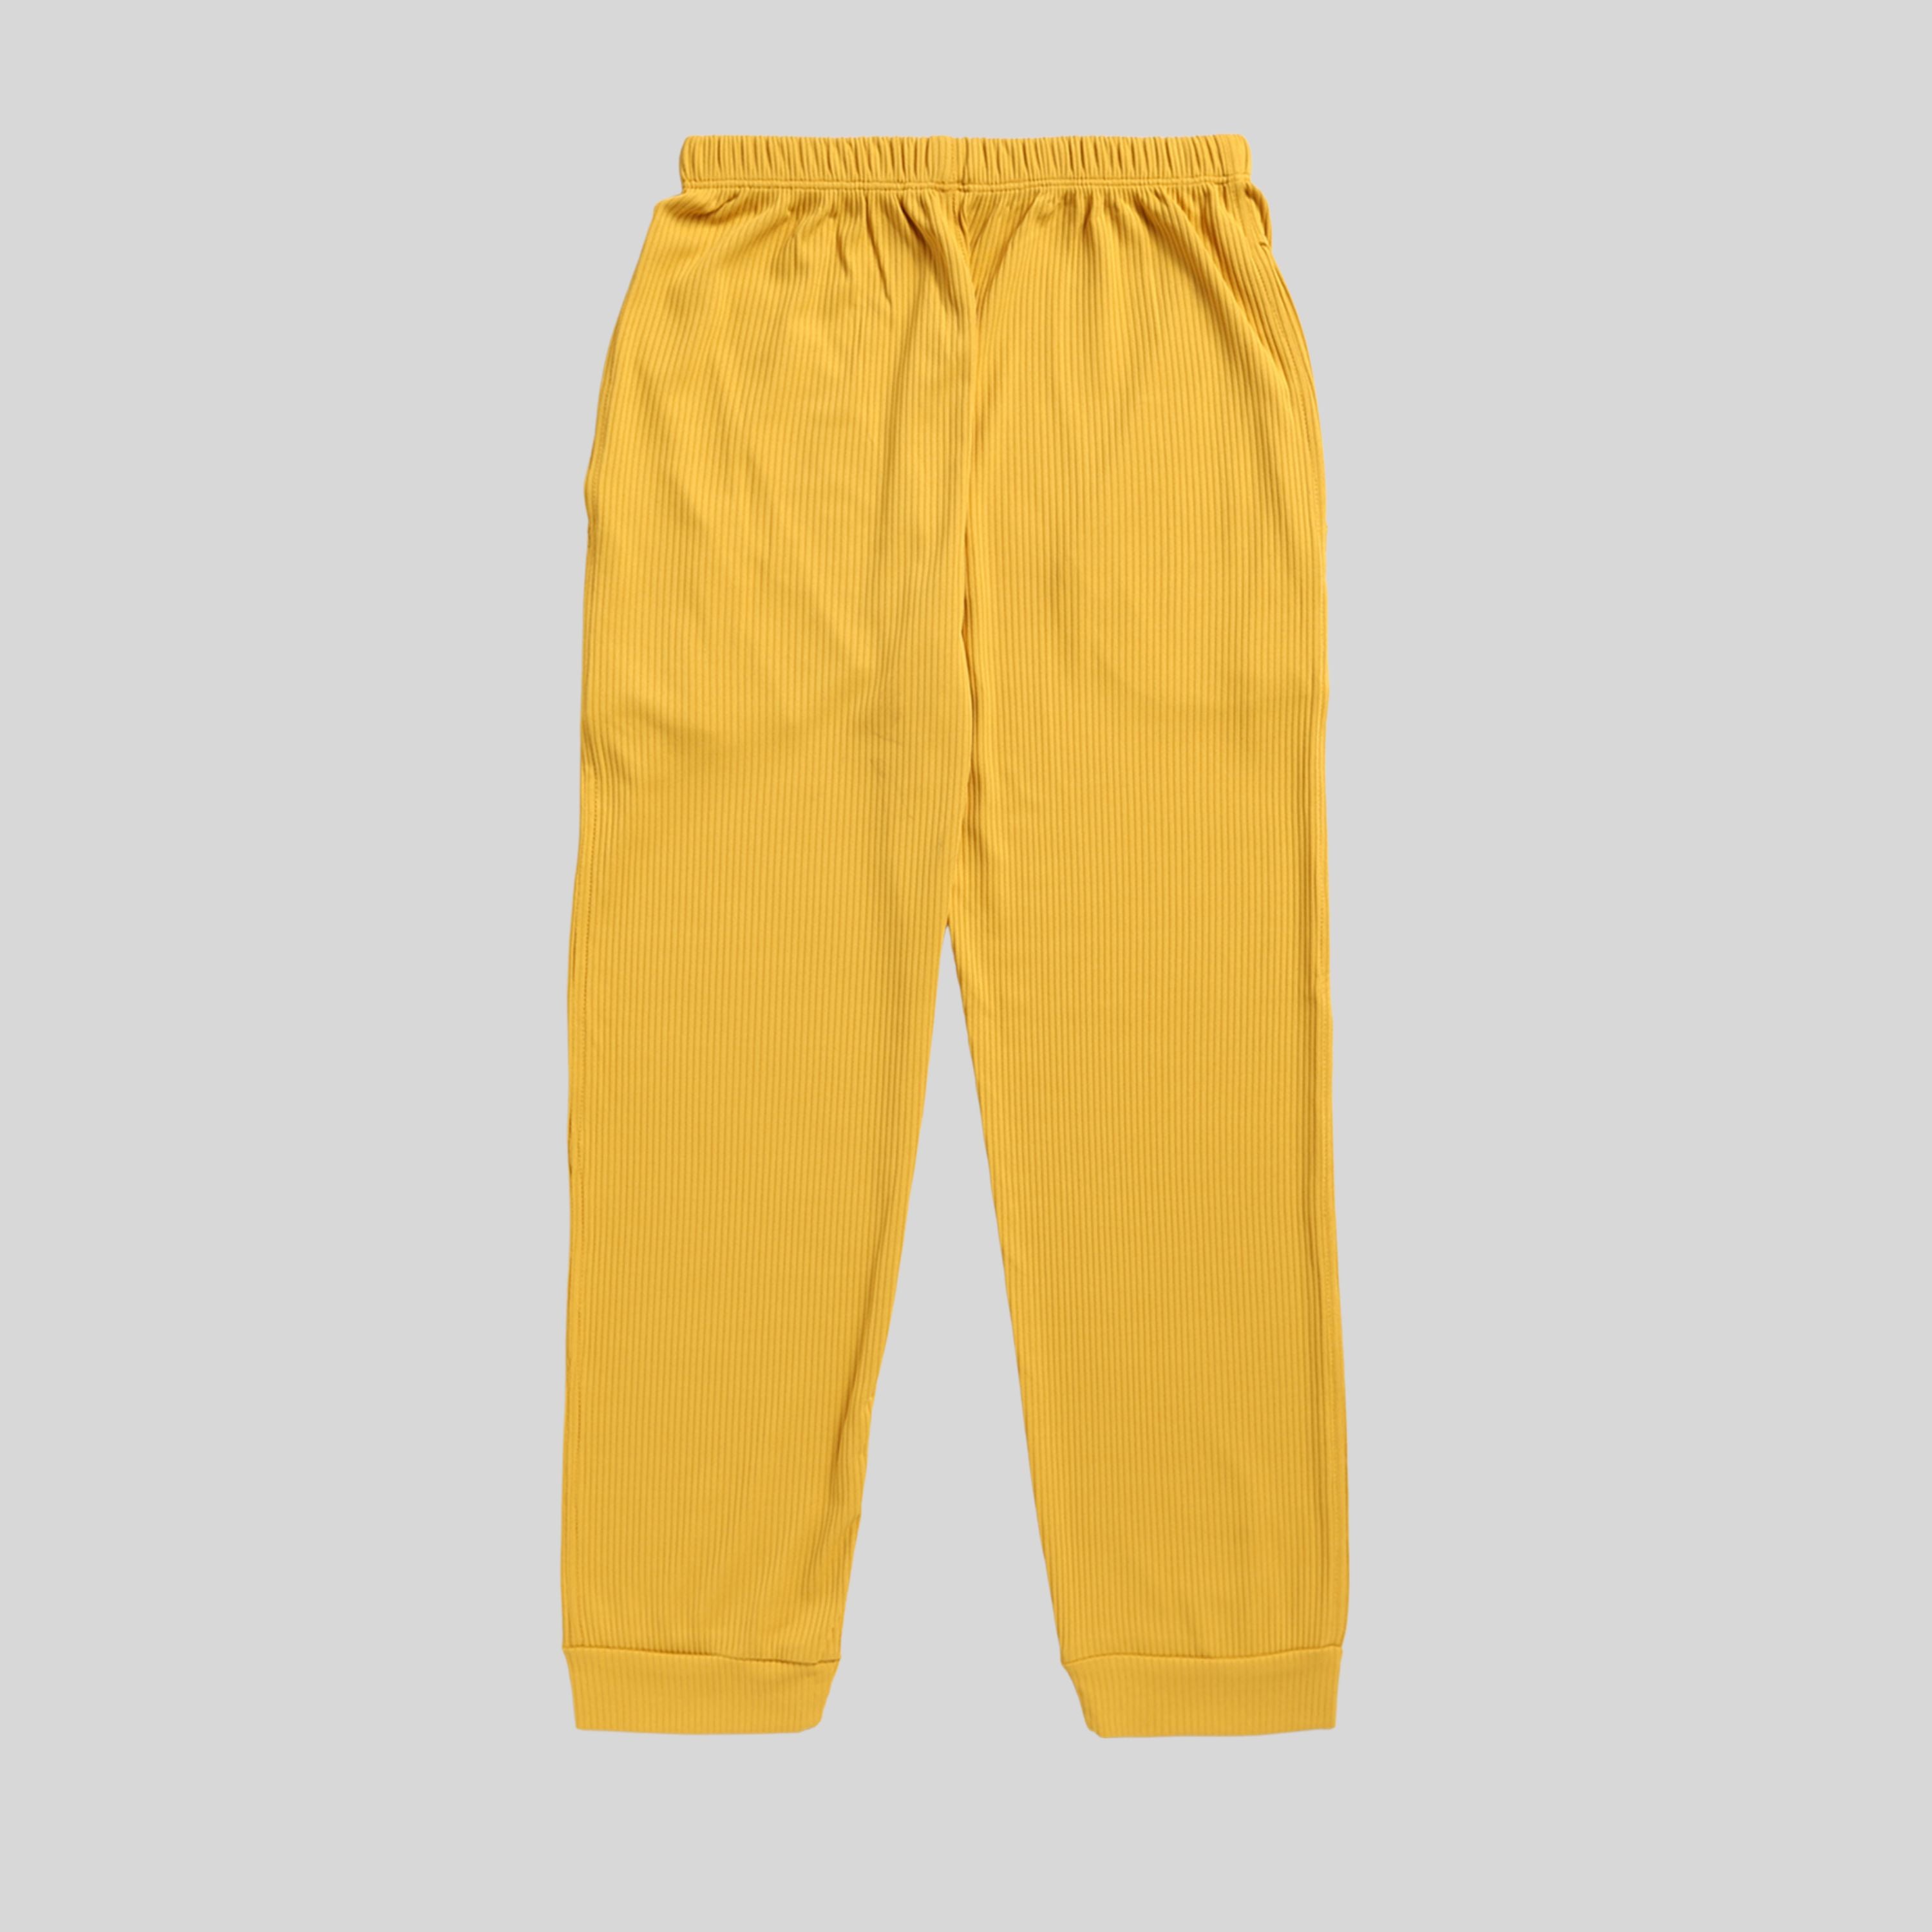 Full Sleeve Clothing Set For Girls  - Yellow